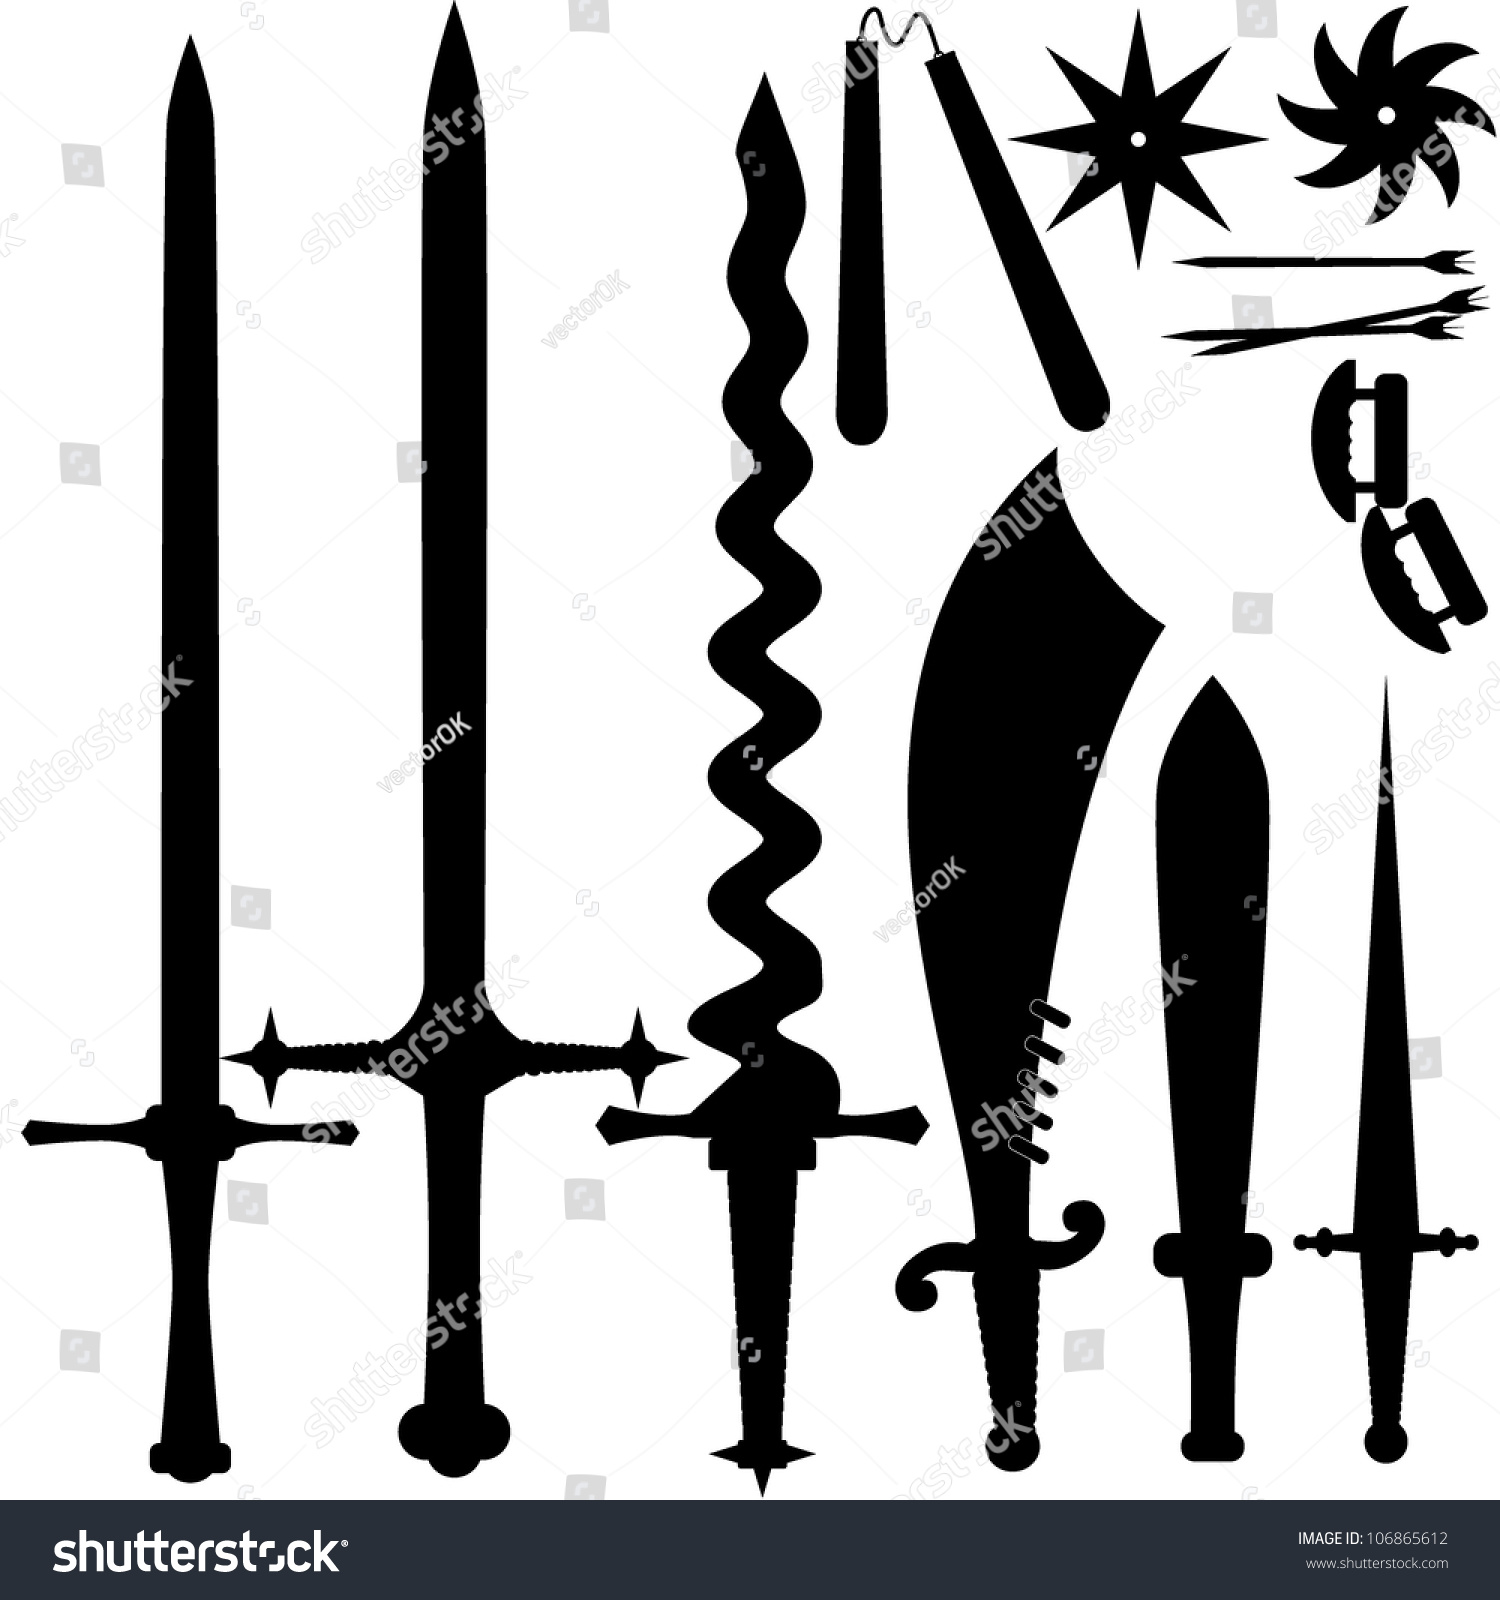 Vector Illustration Of A Set Of Knives. Eps10 - 106865612 : Shutterstock